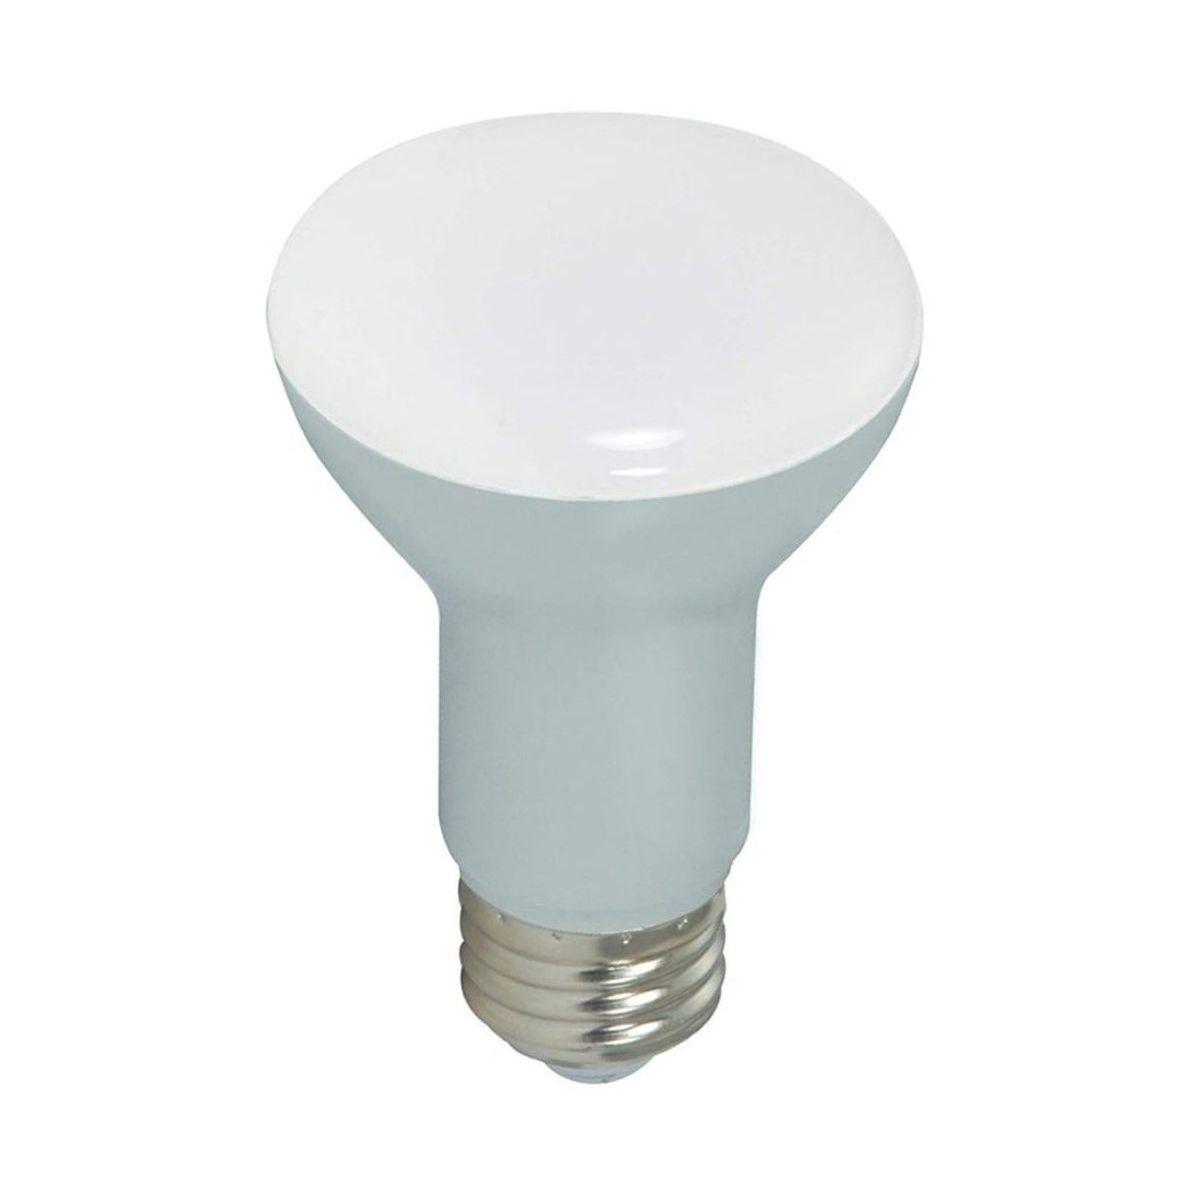 LED R20/BR20 Reflector bulb, 7 watt, 525 Lumens, 2700K, E26 Medium Base, 107 Deg. Flood, Dimmable